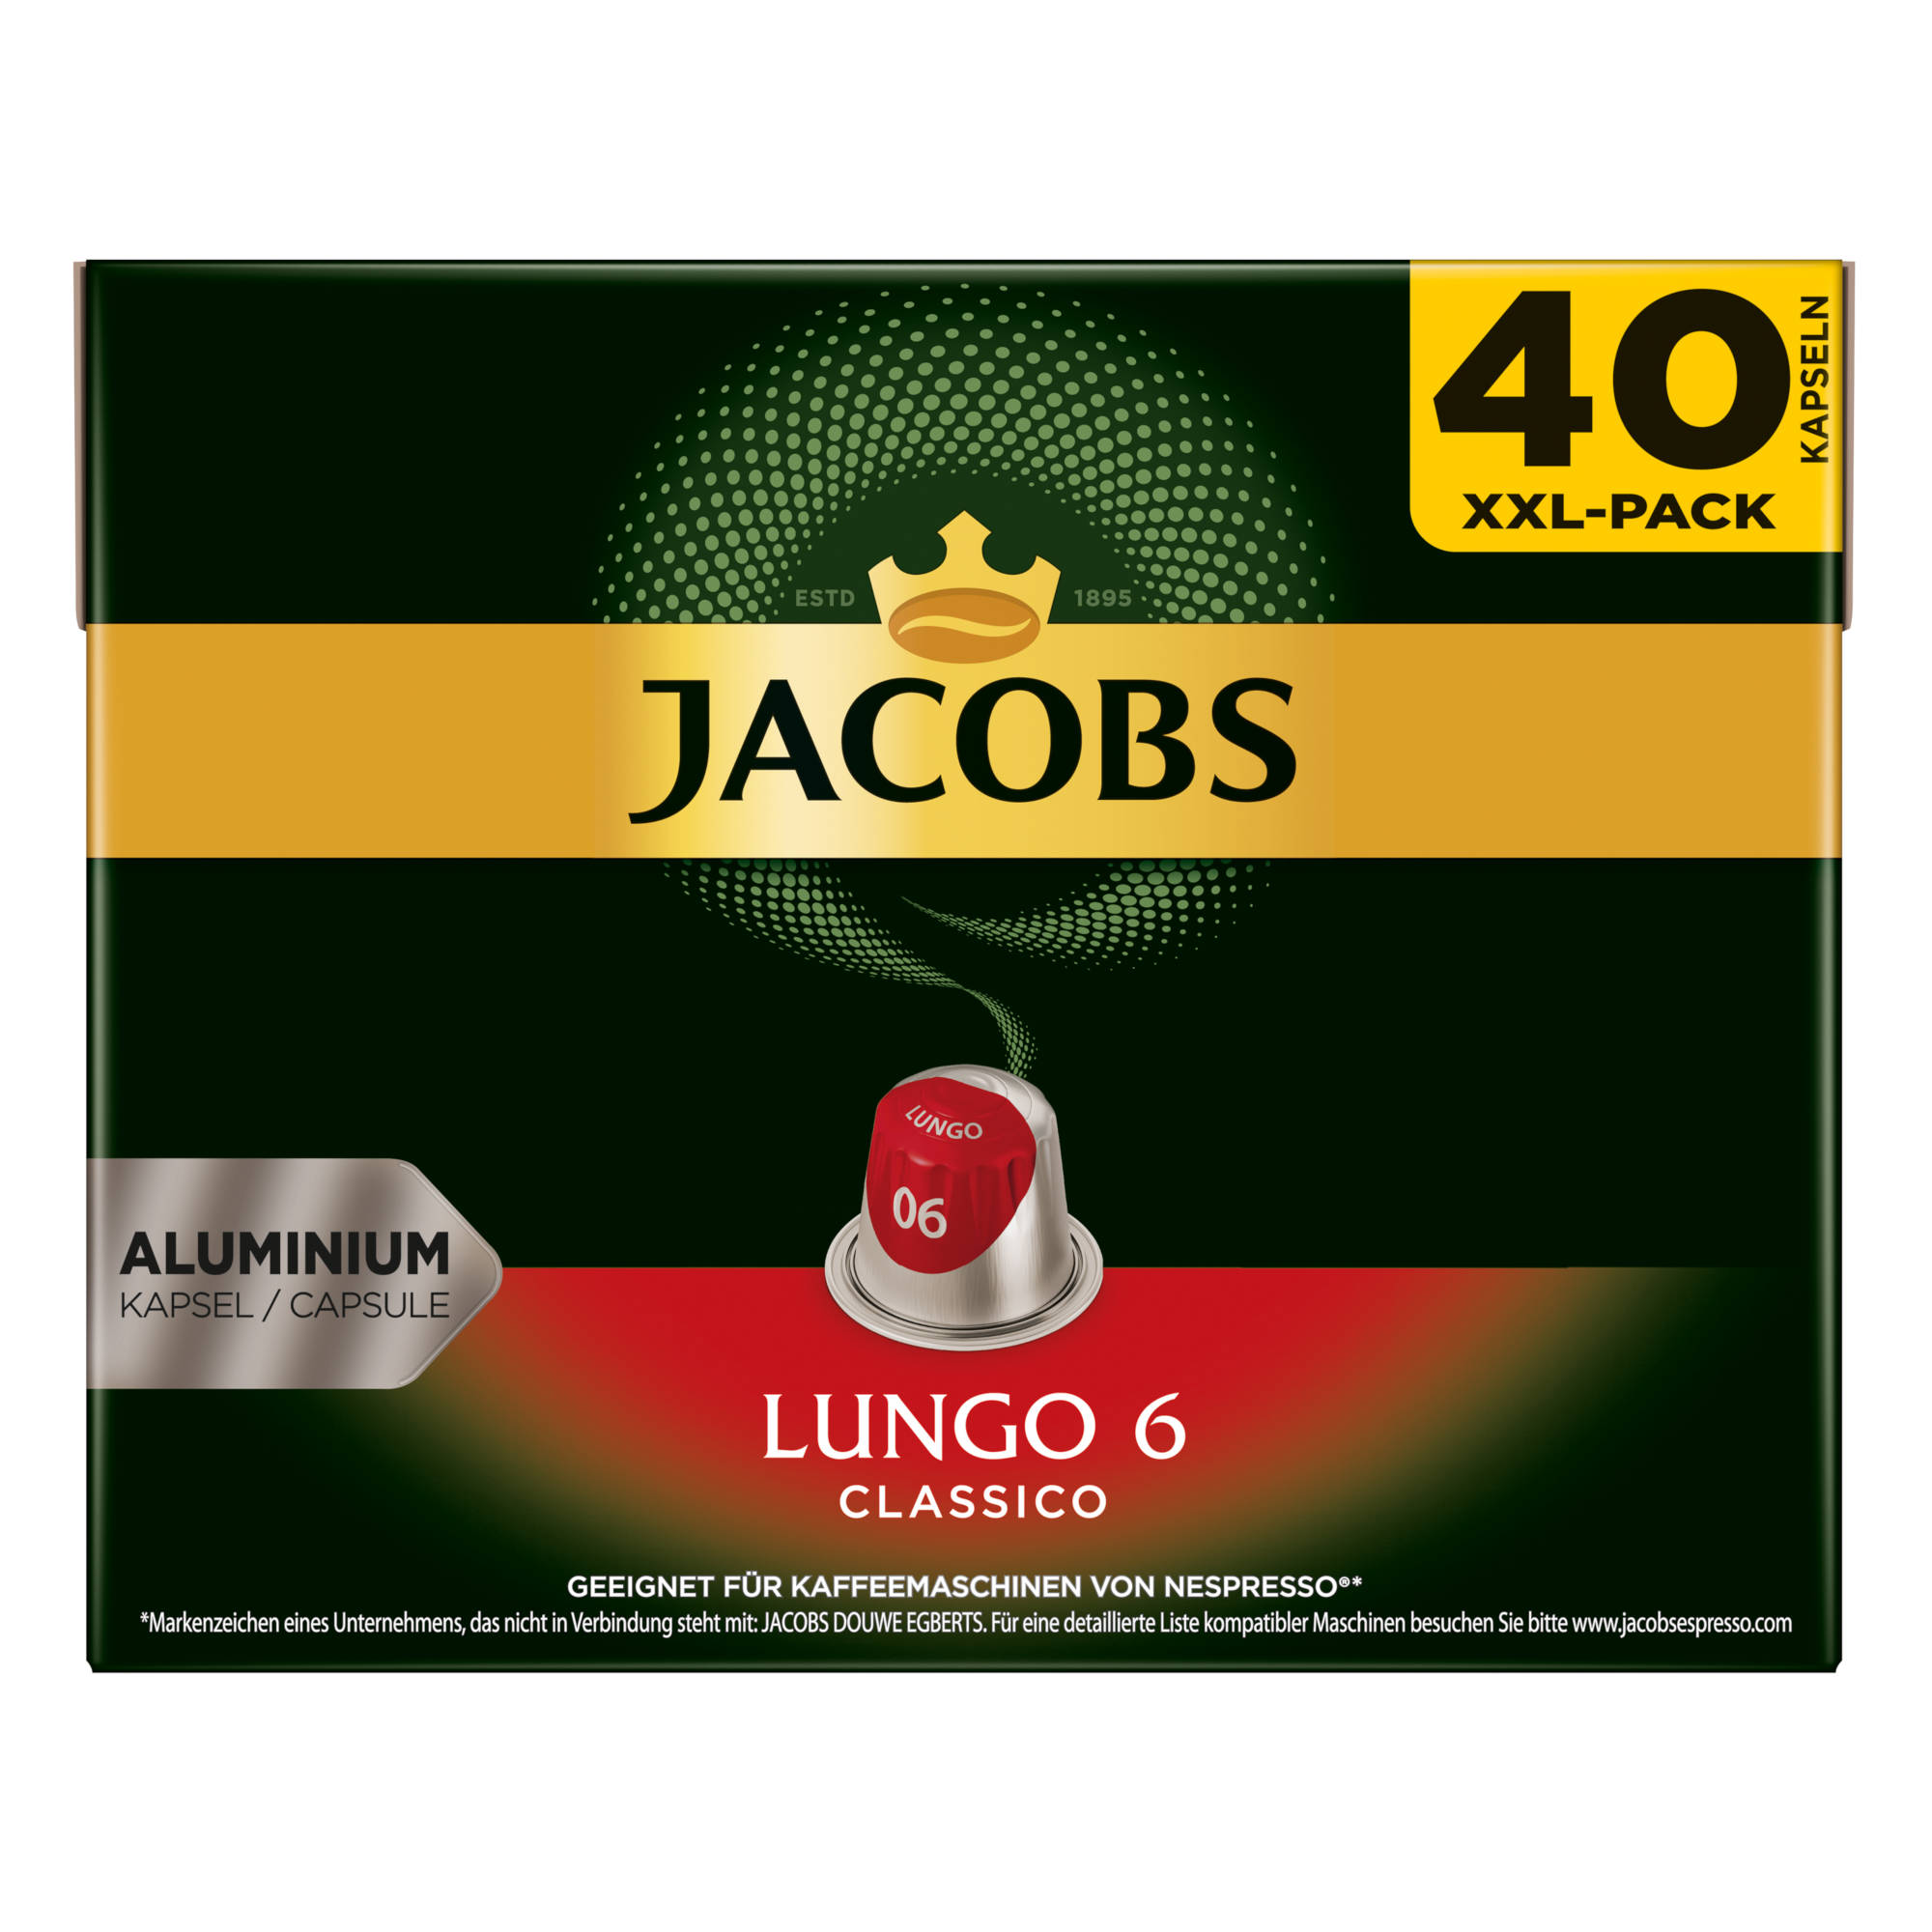 Nespresso®* kompatibel JACOBS Lungo Espresso 6 + System) Kaffeekapseln (Nespresso 240 10